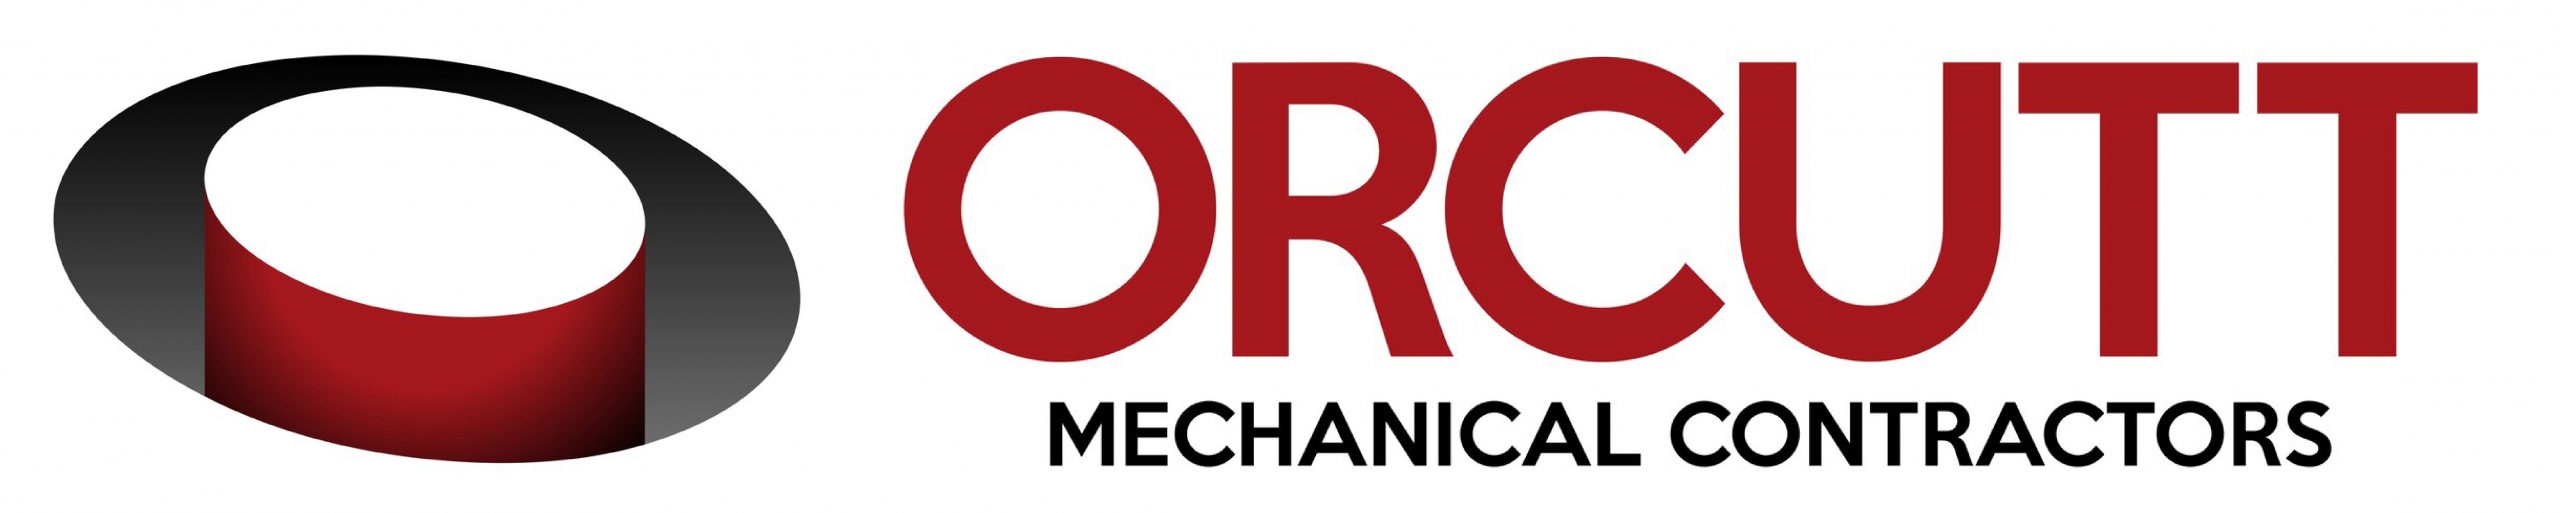 Orcutt Mechanical Contractors logo